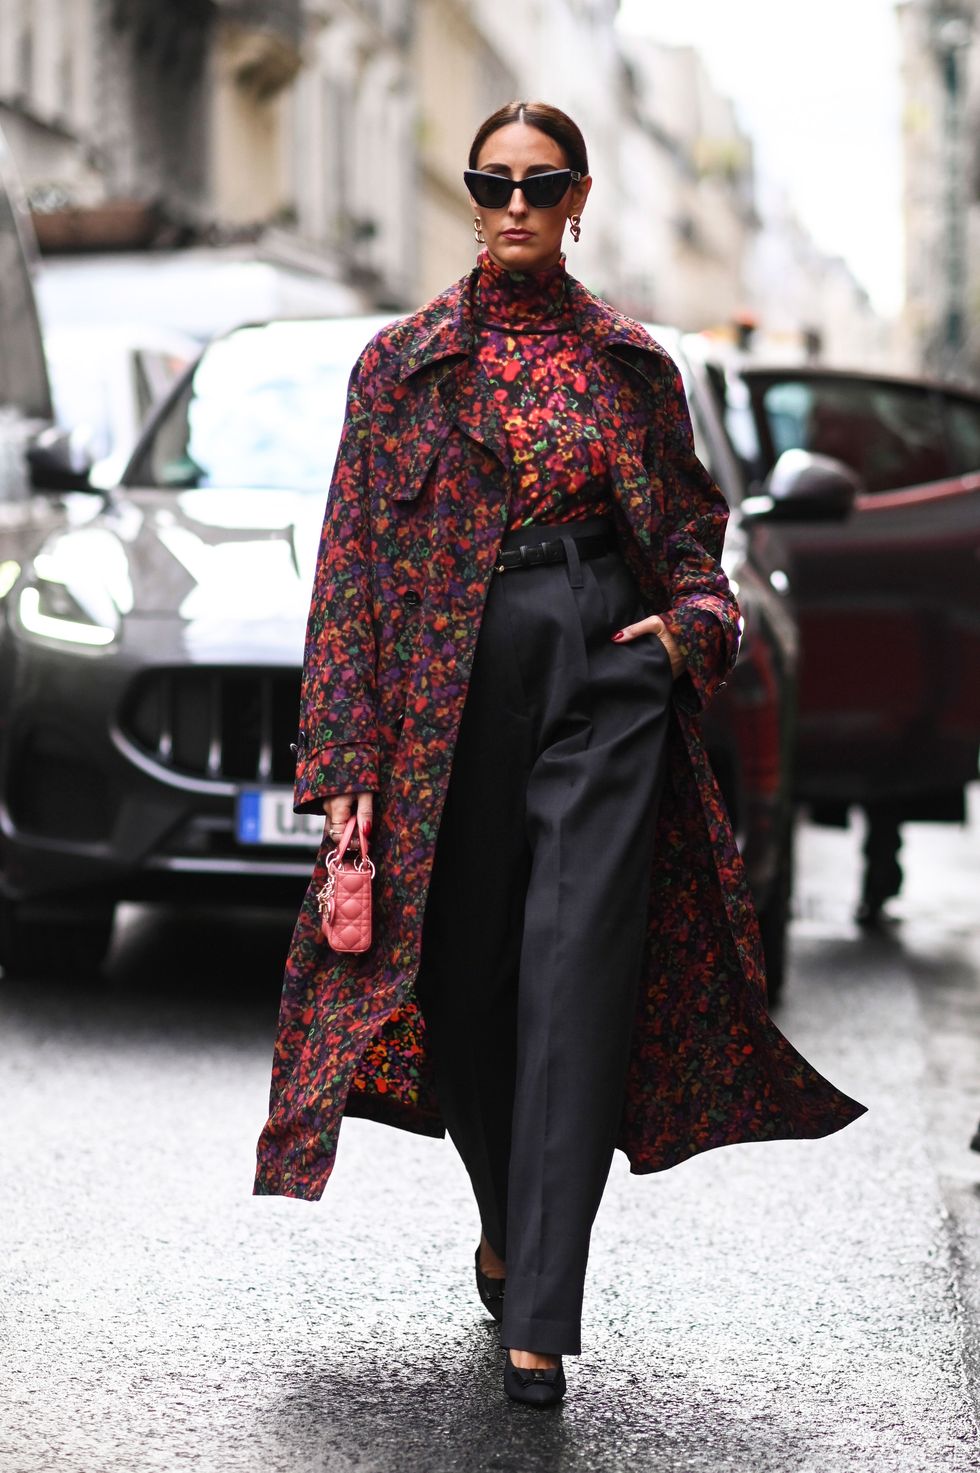 woman in a dark floral coat walking down a street